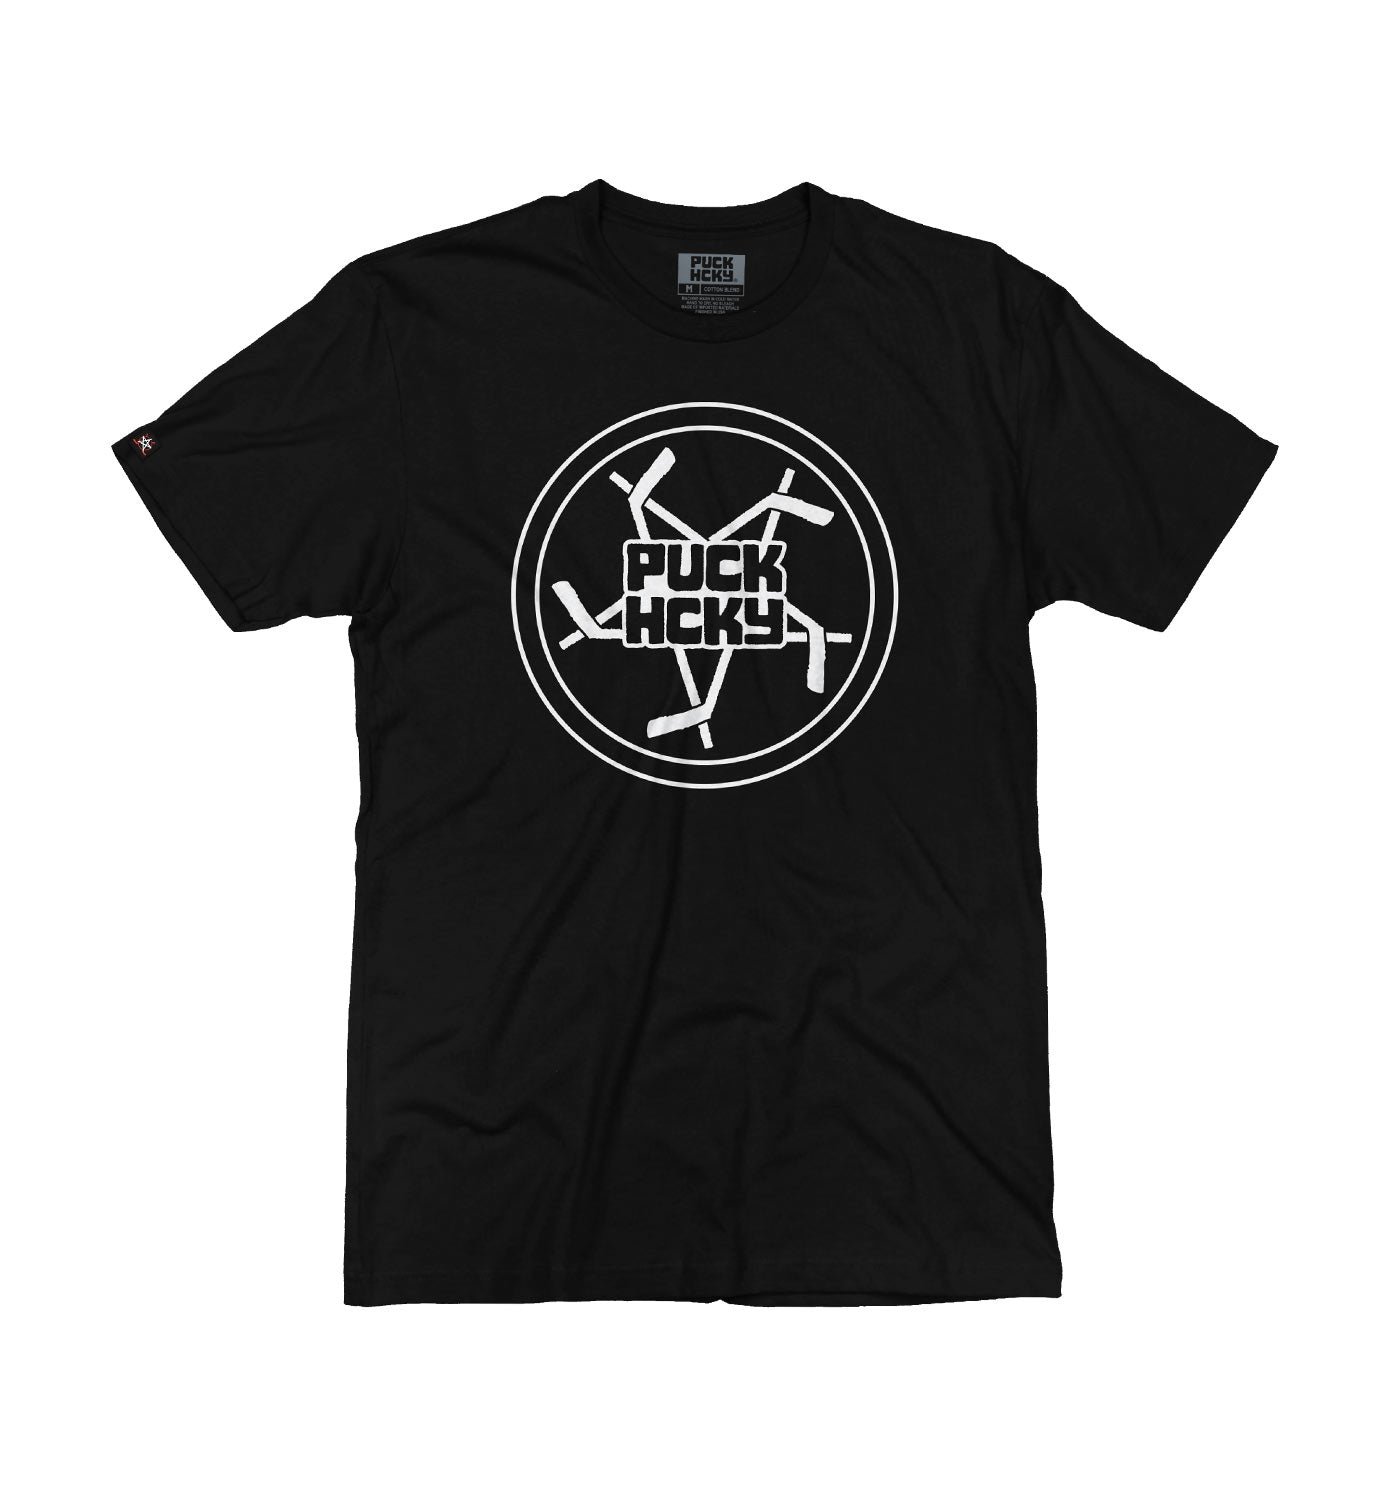 PUCK HCKY 'PENTASTICK' short sleeve hockey t-shirt in black